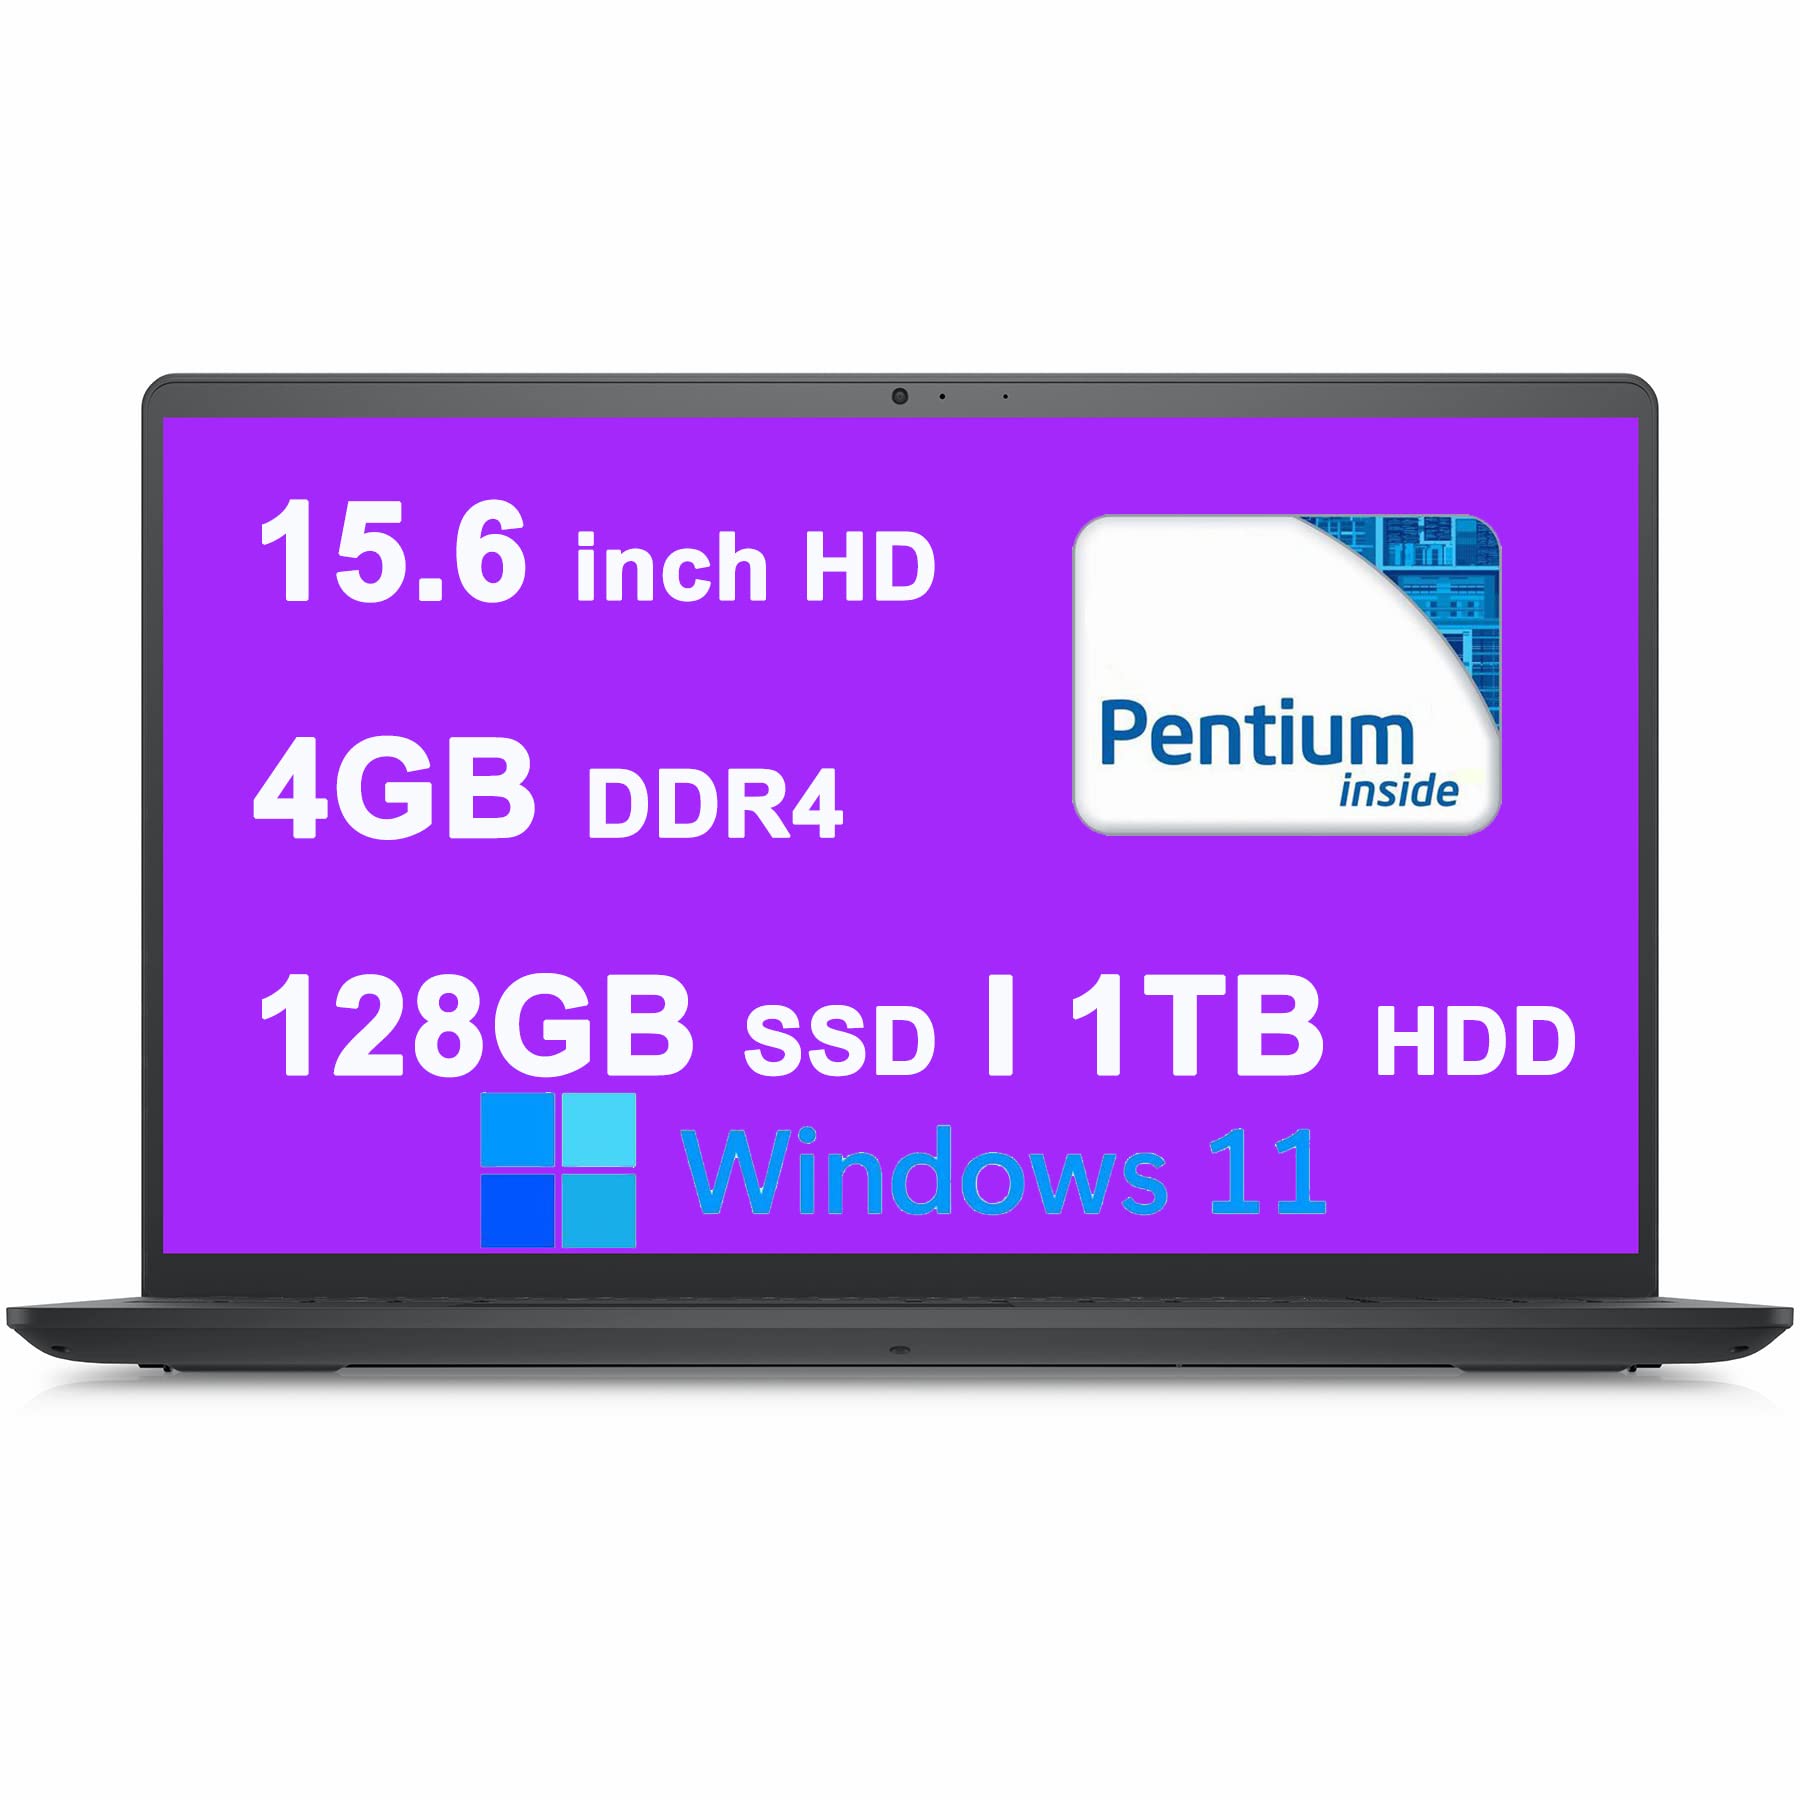 Dell Inspiron 15 3000 3510 Premium Business Laptop I 15.6 inch HD Anti-Glare Display I Intel 4-Core Pentium Silver N5030 Processor I 4GB DDR4 128GB SSD + 1TB HDD I HDMI Win11 Carbon Black (Renewed)